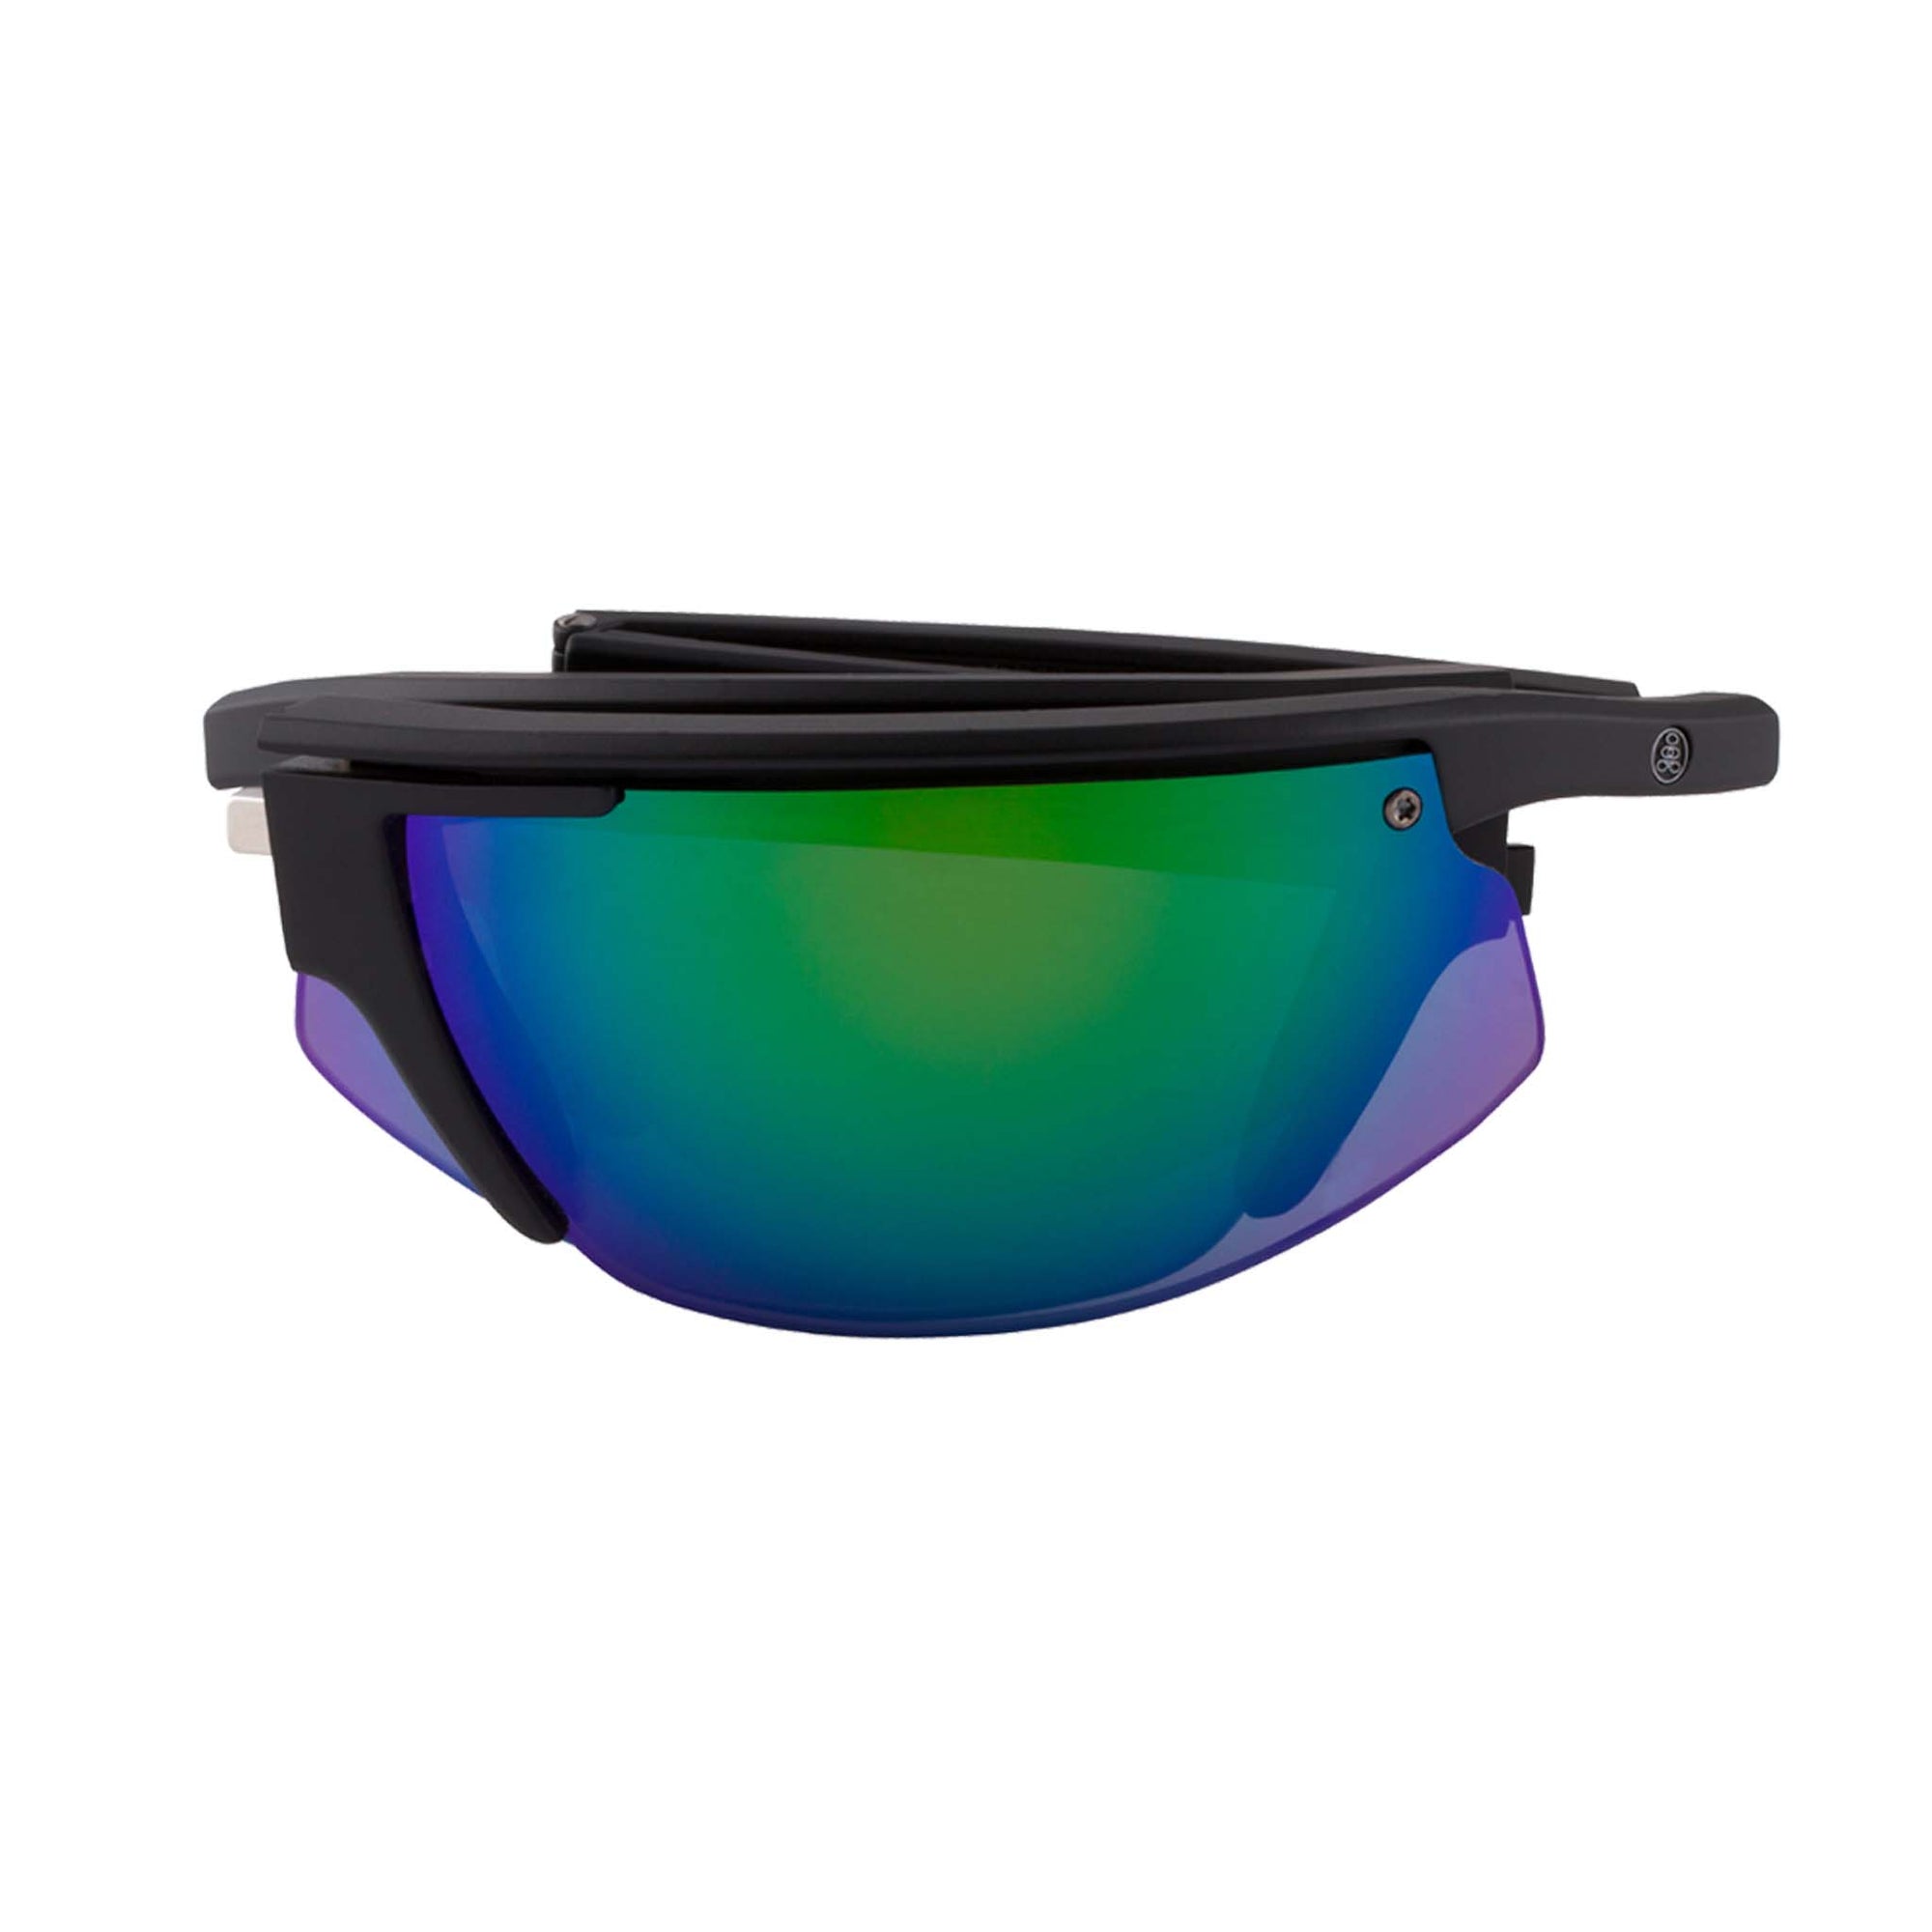 Popticals, Premium Compact Sunglasses, PopStar, 010040-BMEN, Polarized Sunglasses, Matte Black Frame, Gray Lenses w/Green Mirror Finish, Compact View